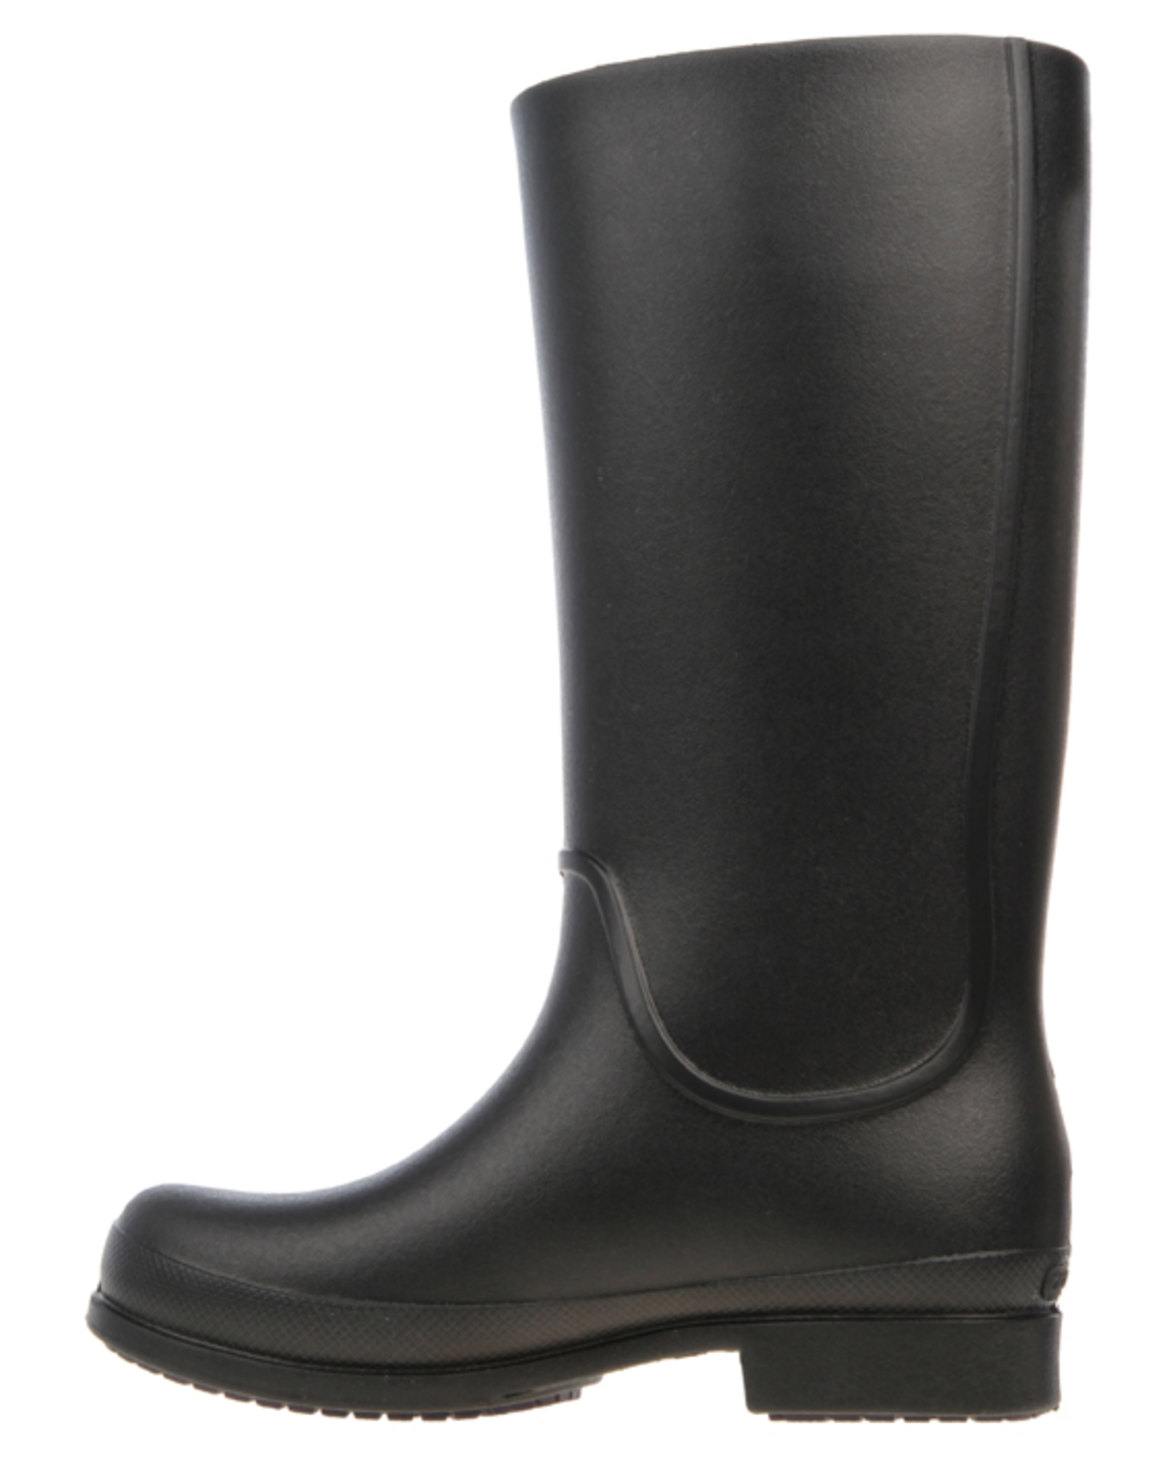 Crocs Wellie Patent Rain Boots Black | Zando